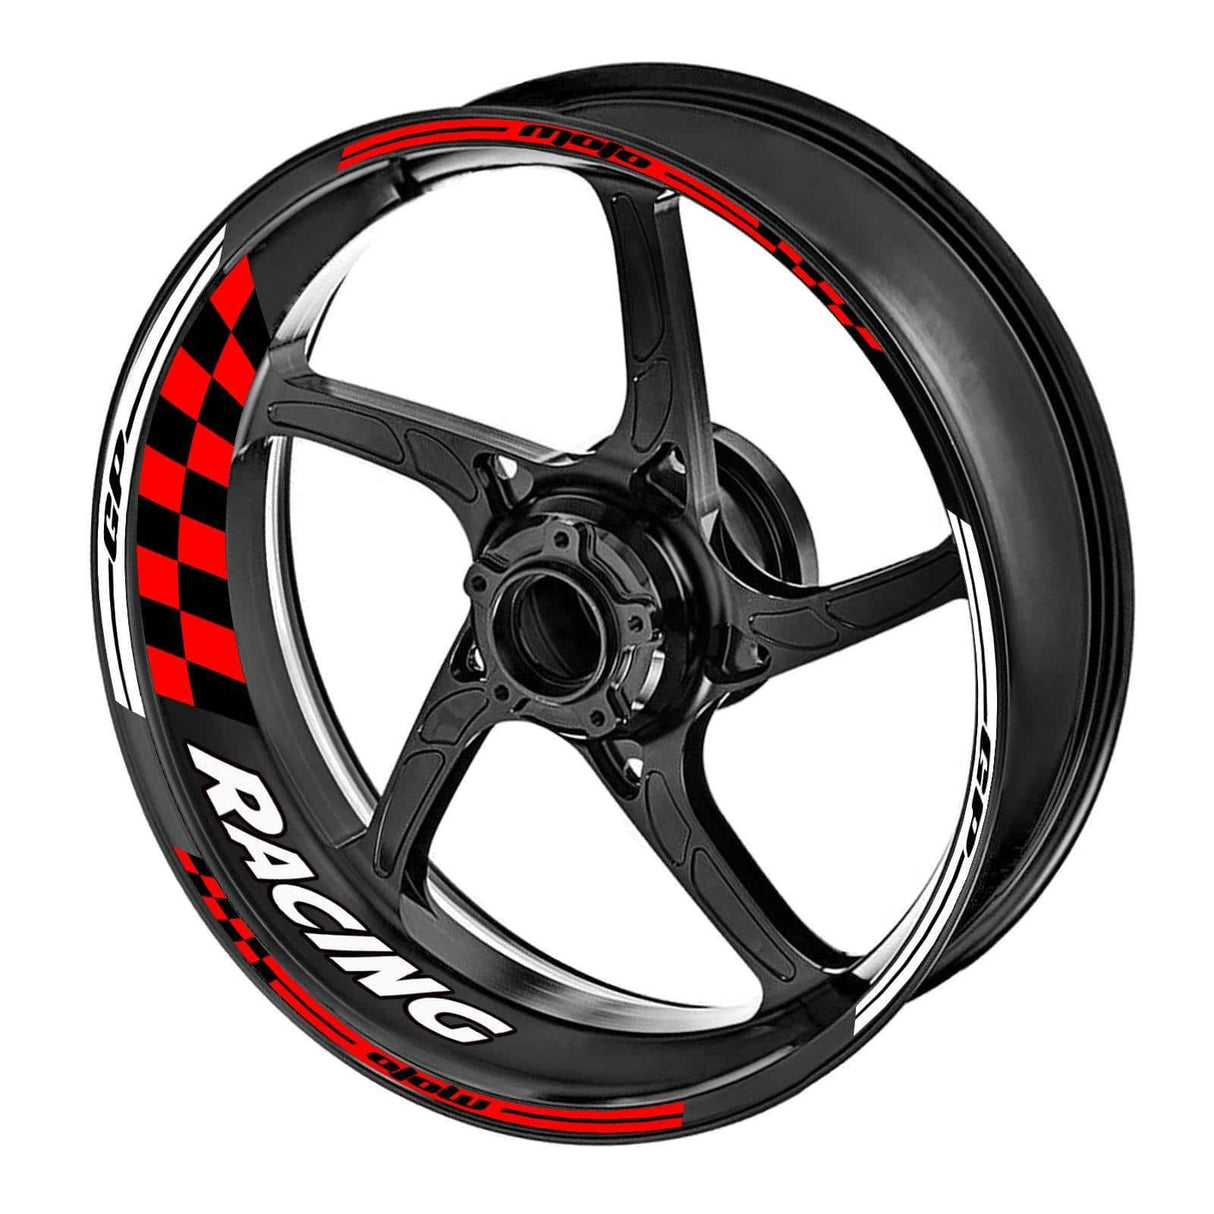 StickerBao Red 17 inch GP03 Platinum Inner Edge Rim Sticker Universal Motorcycle Rim Wheel Decal Racing For Aprilia